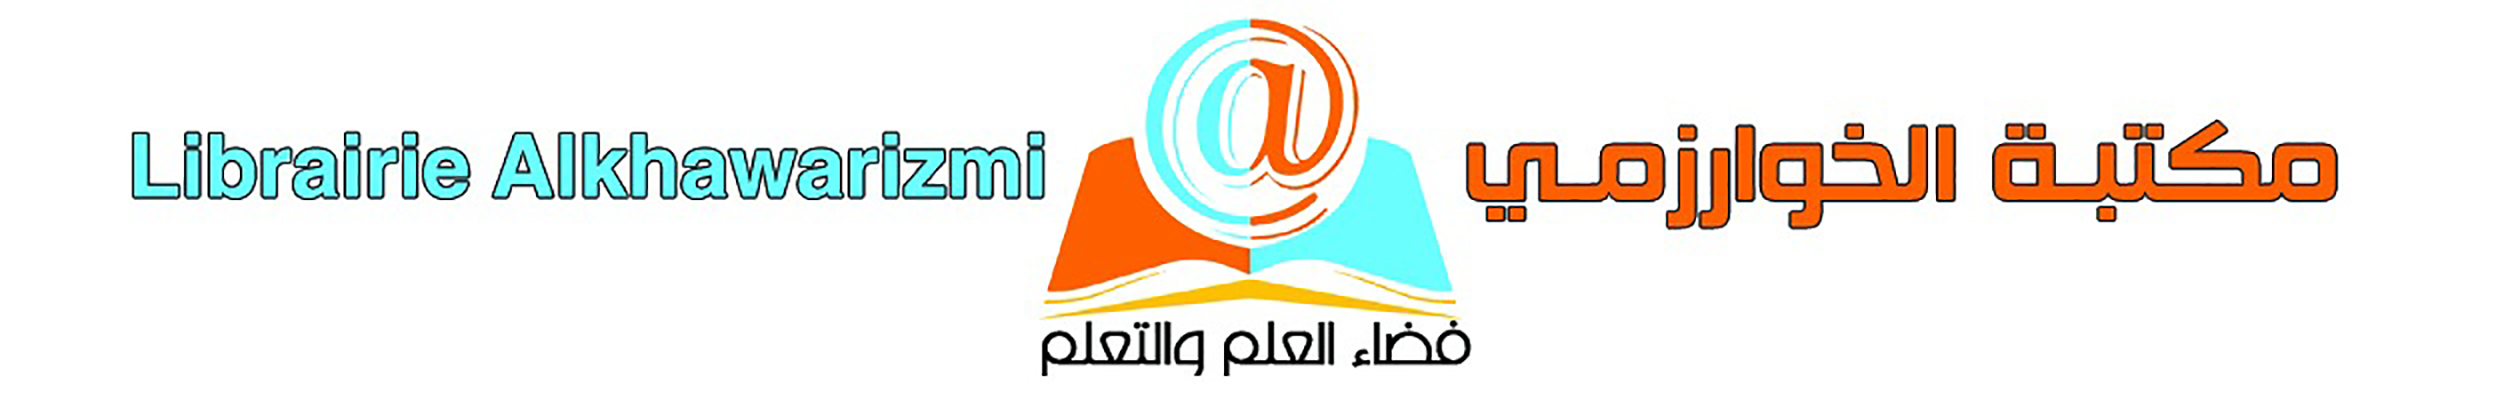 Librairie Alkhawarizmi | مكتبة الخوارزمي